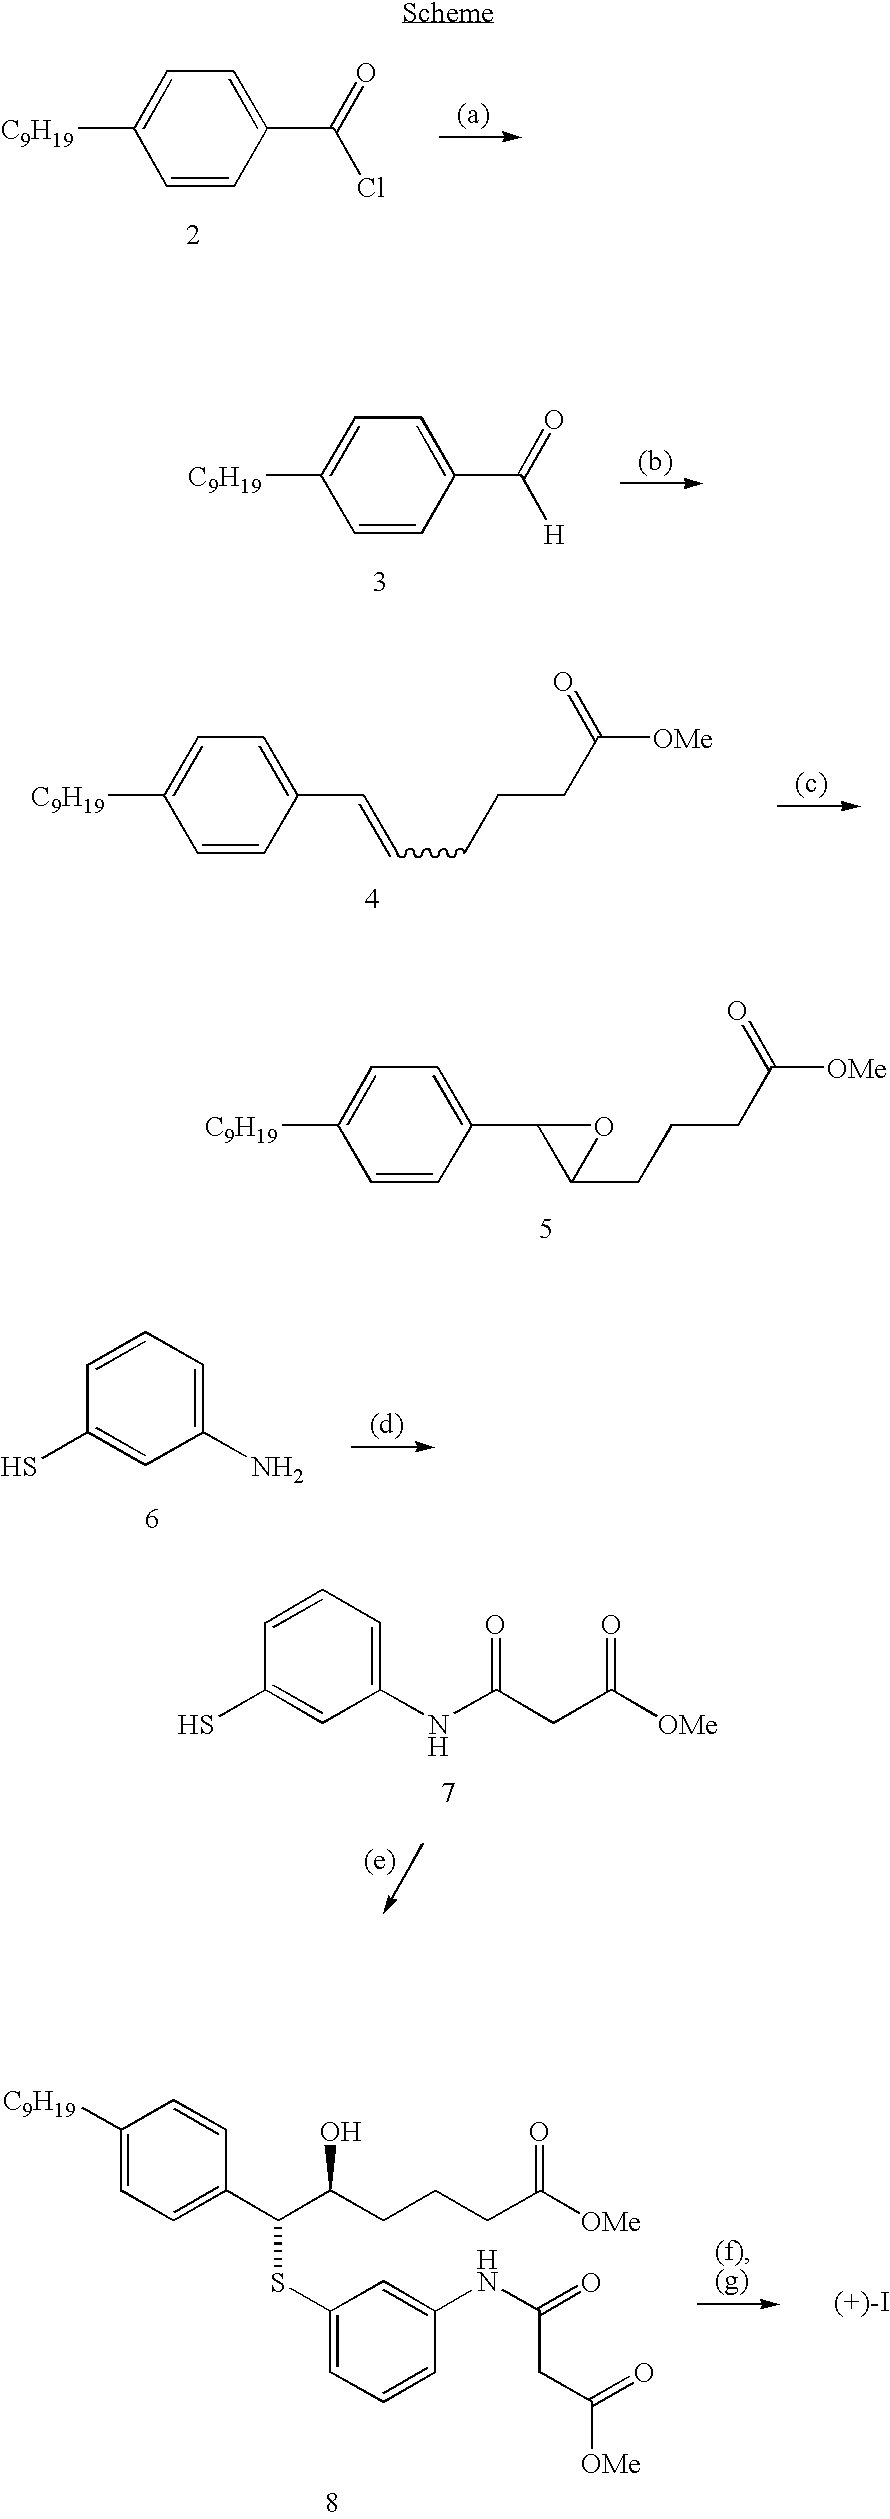 Use of cysteinyl leukotriene 2 receptor antagonists